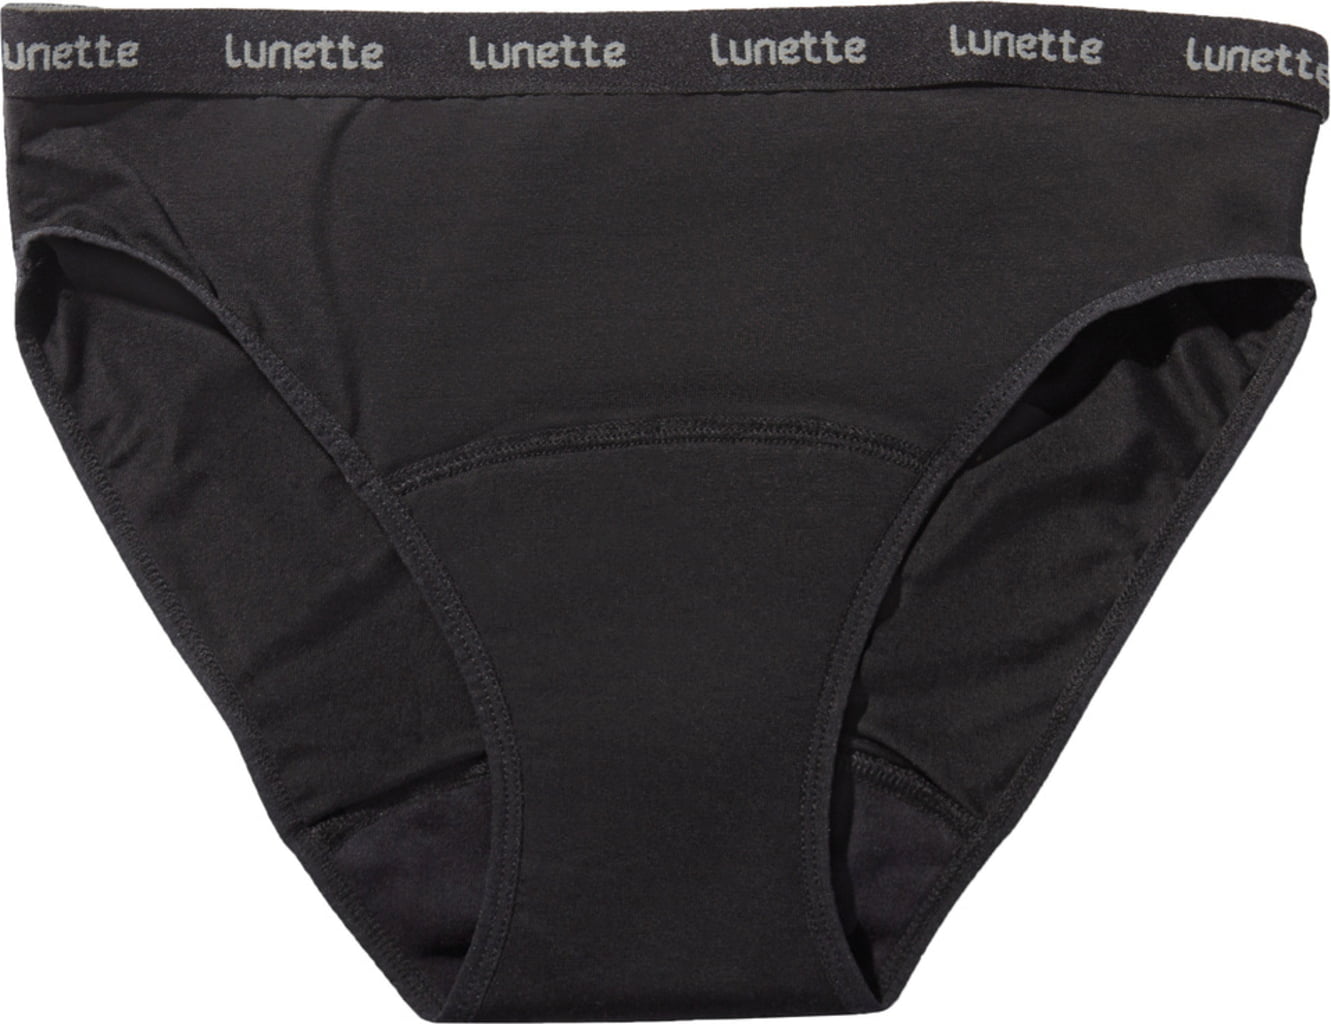 Lunette period panty. Period Underwear - Black - Ecco Verde Online Shop